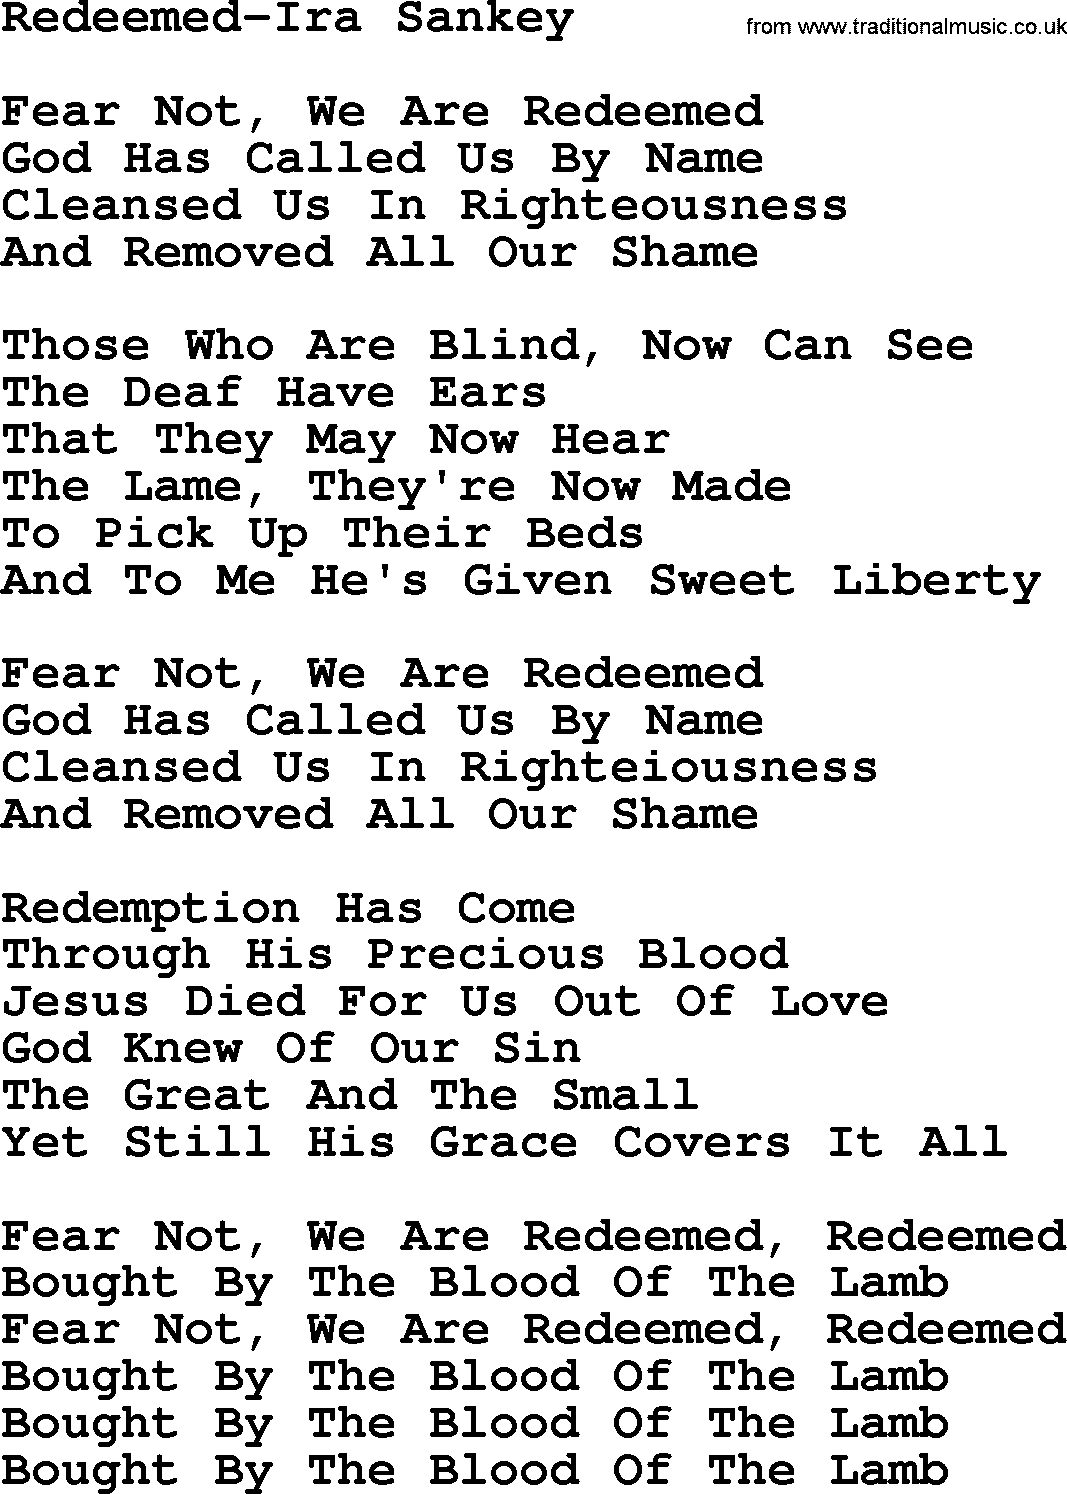 Ira Sankey hymn: Redeemed-Ira Sankey, lyrics